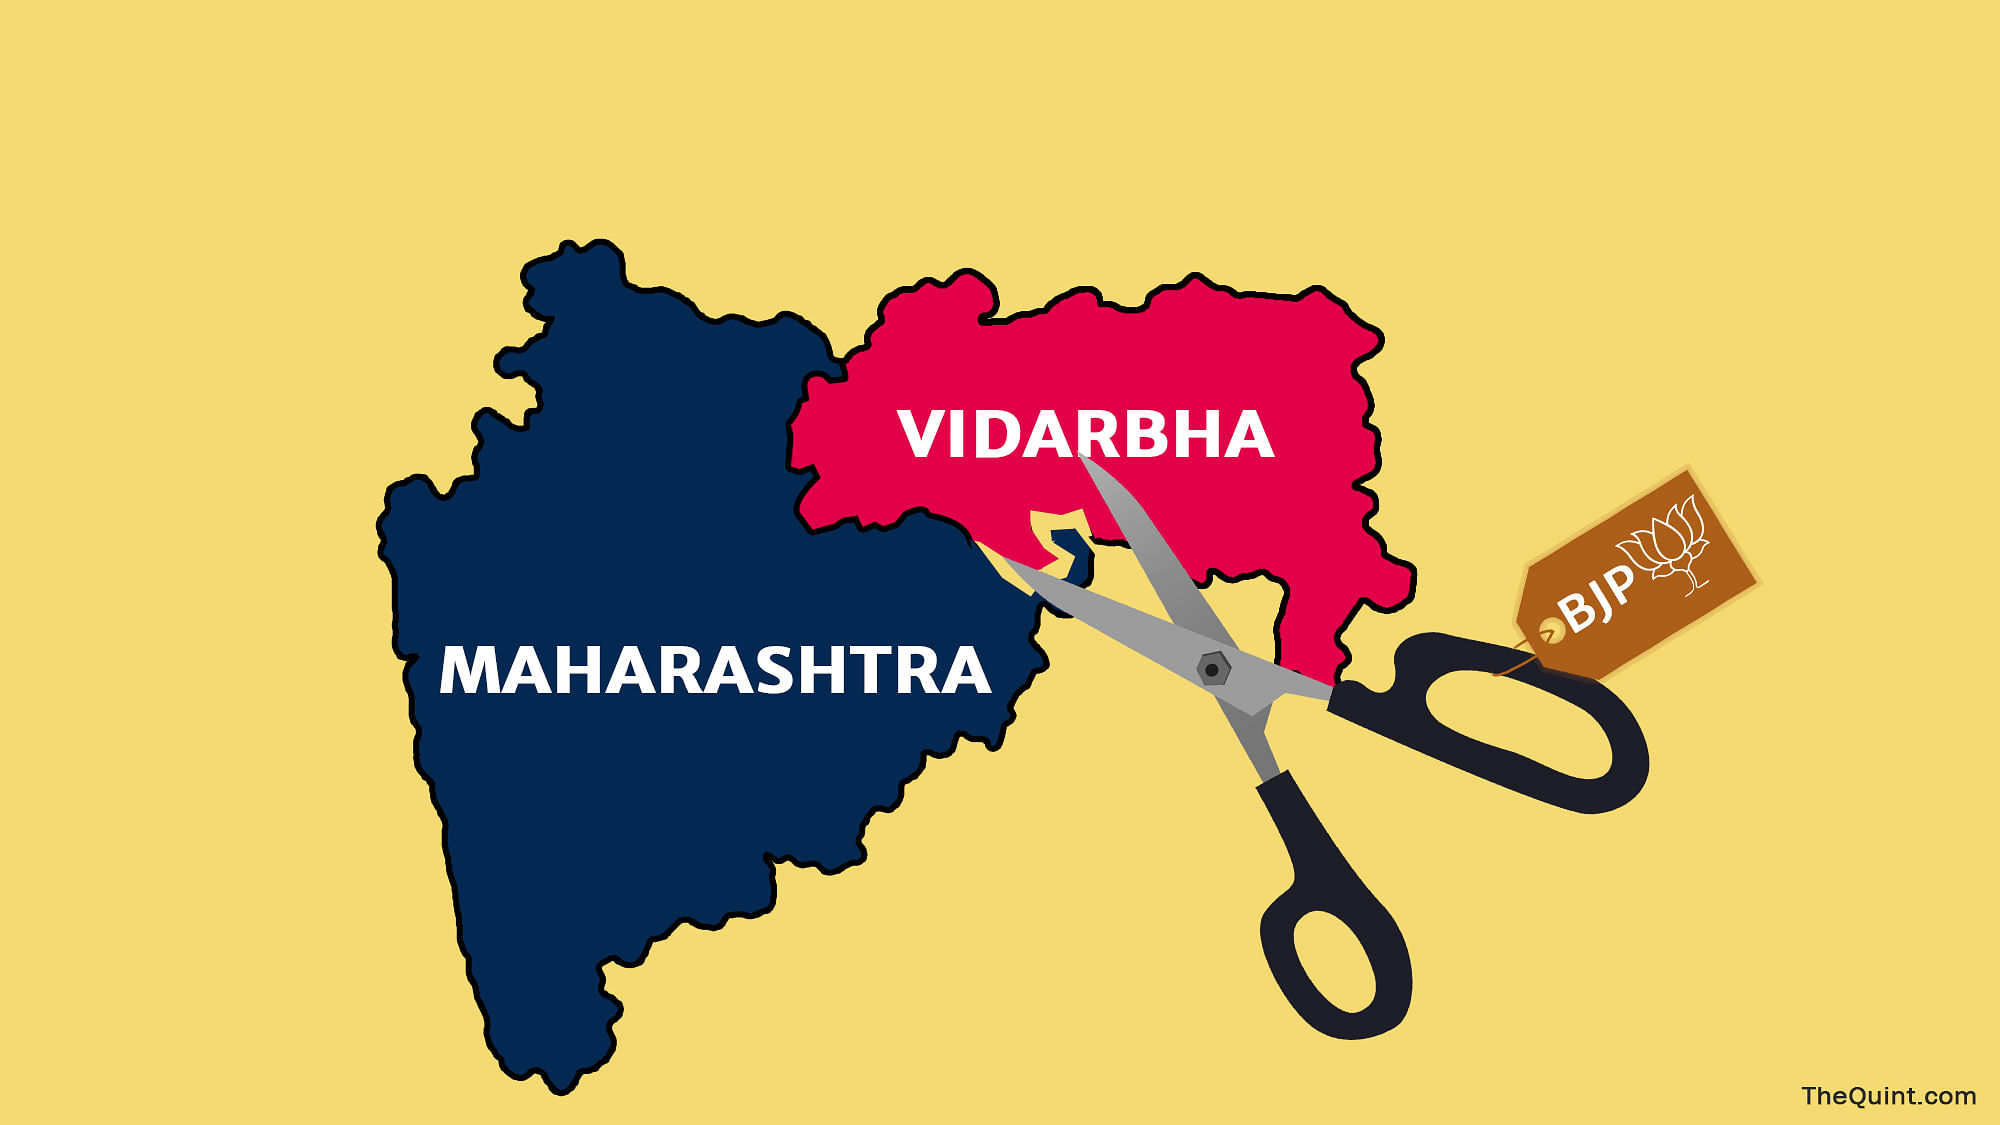 BJP supports carving out of Vidarbha state from Maharashtra. (Image: Liju Joseph)